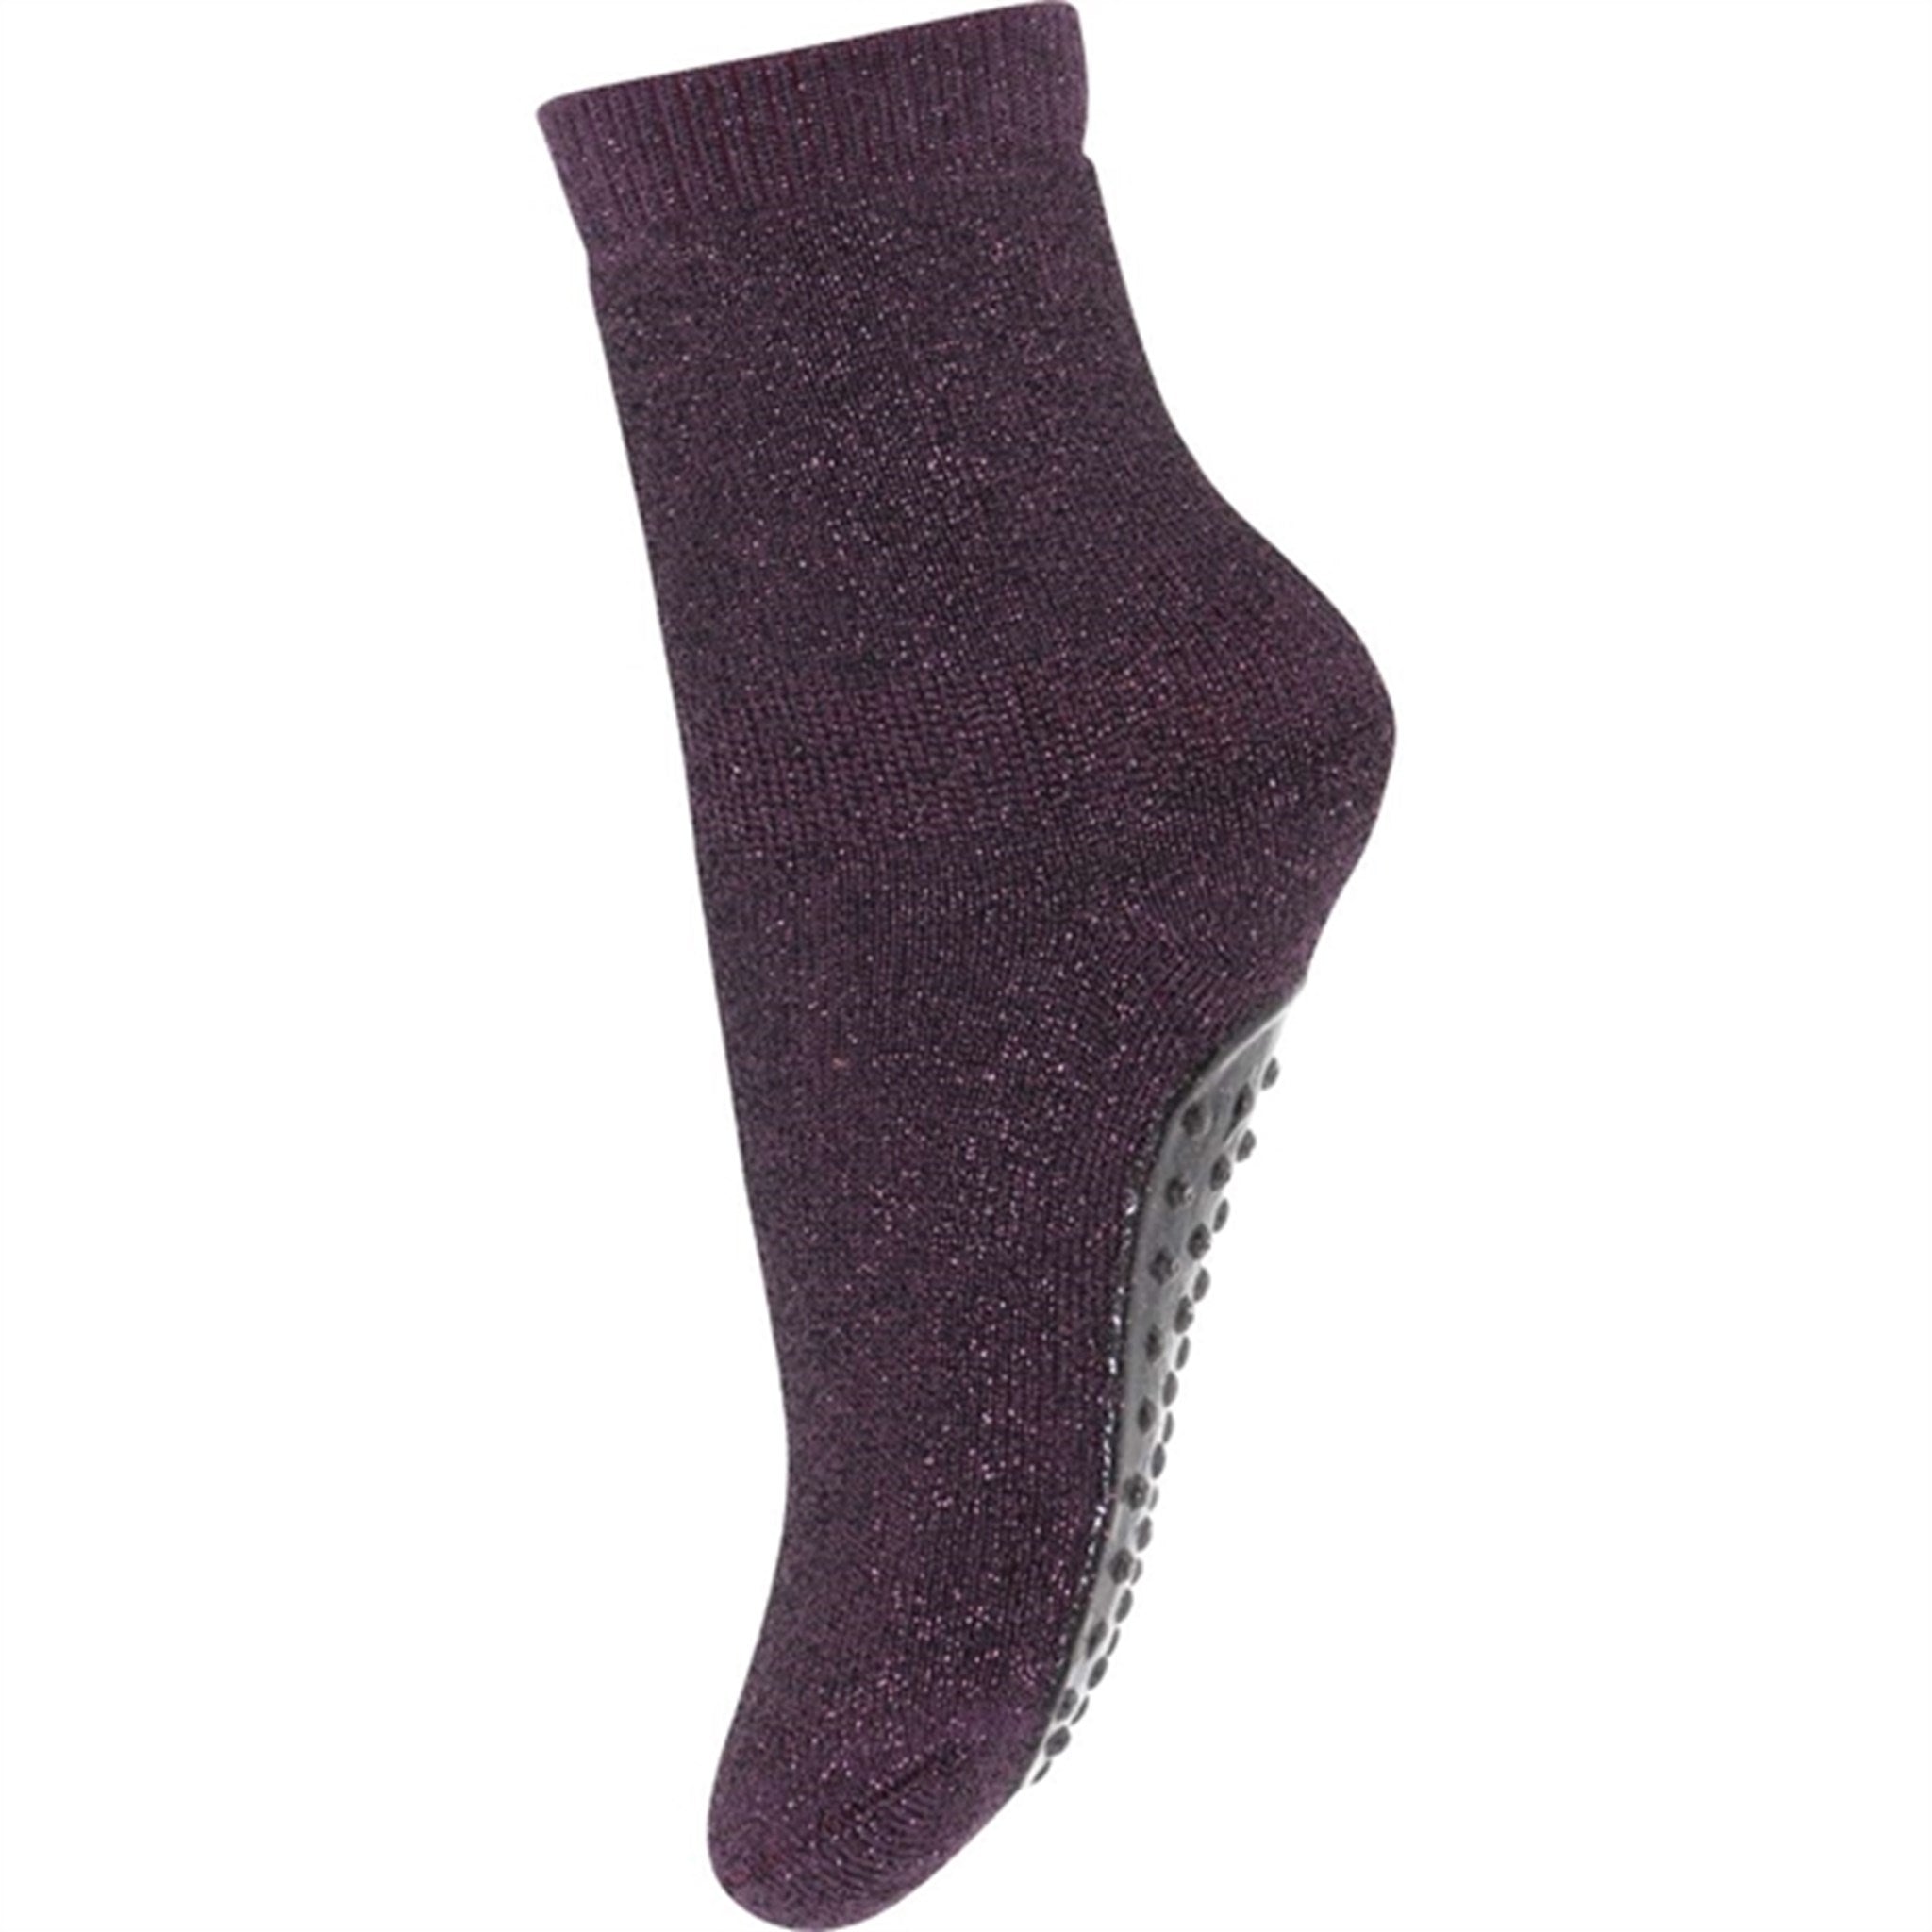 MP 79208 Celina Socks With Anti-Slip 2001 Metallic Glitter Dark Purple